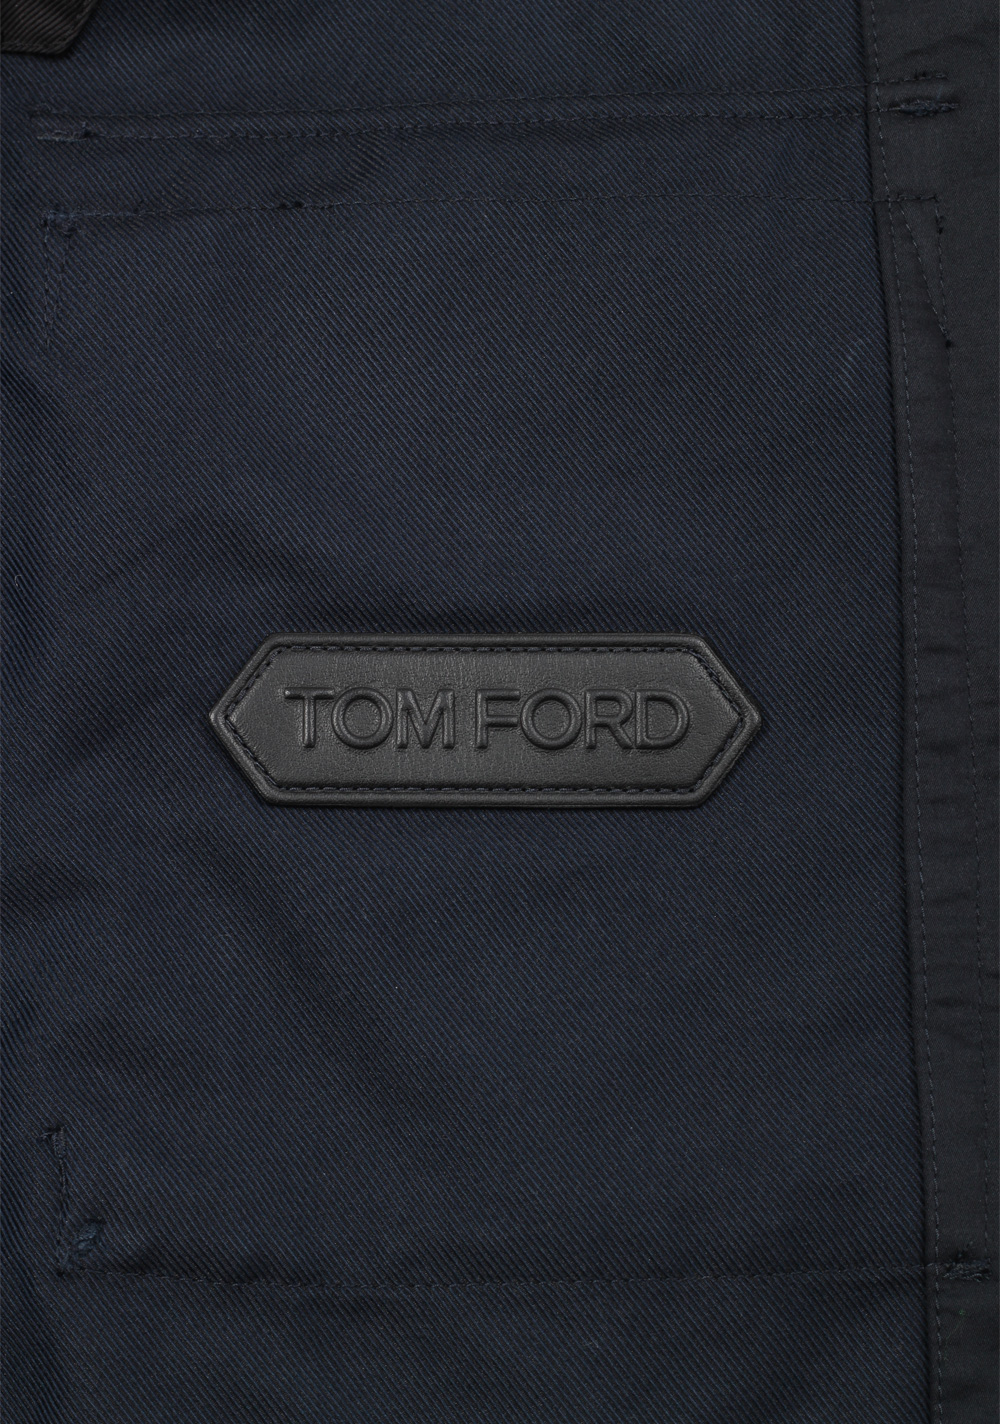 TOM FORD Blue Military Field James Bond Jacket Coat Size 56 / 46R U.S. Outerwear | Costume Limité